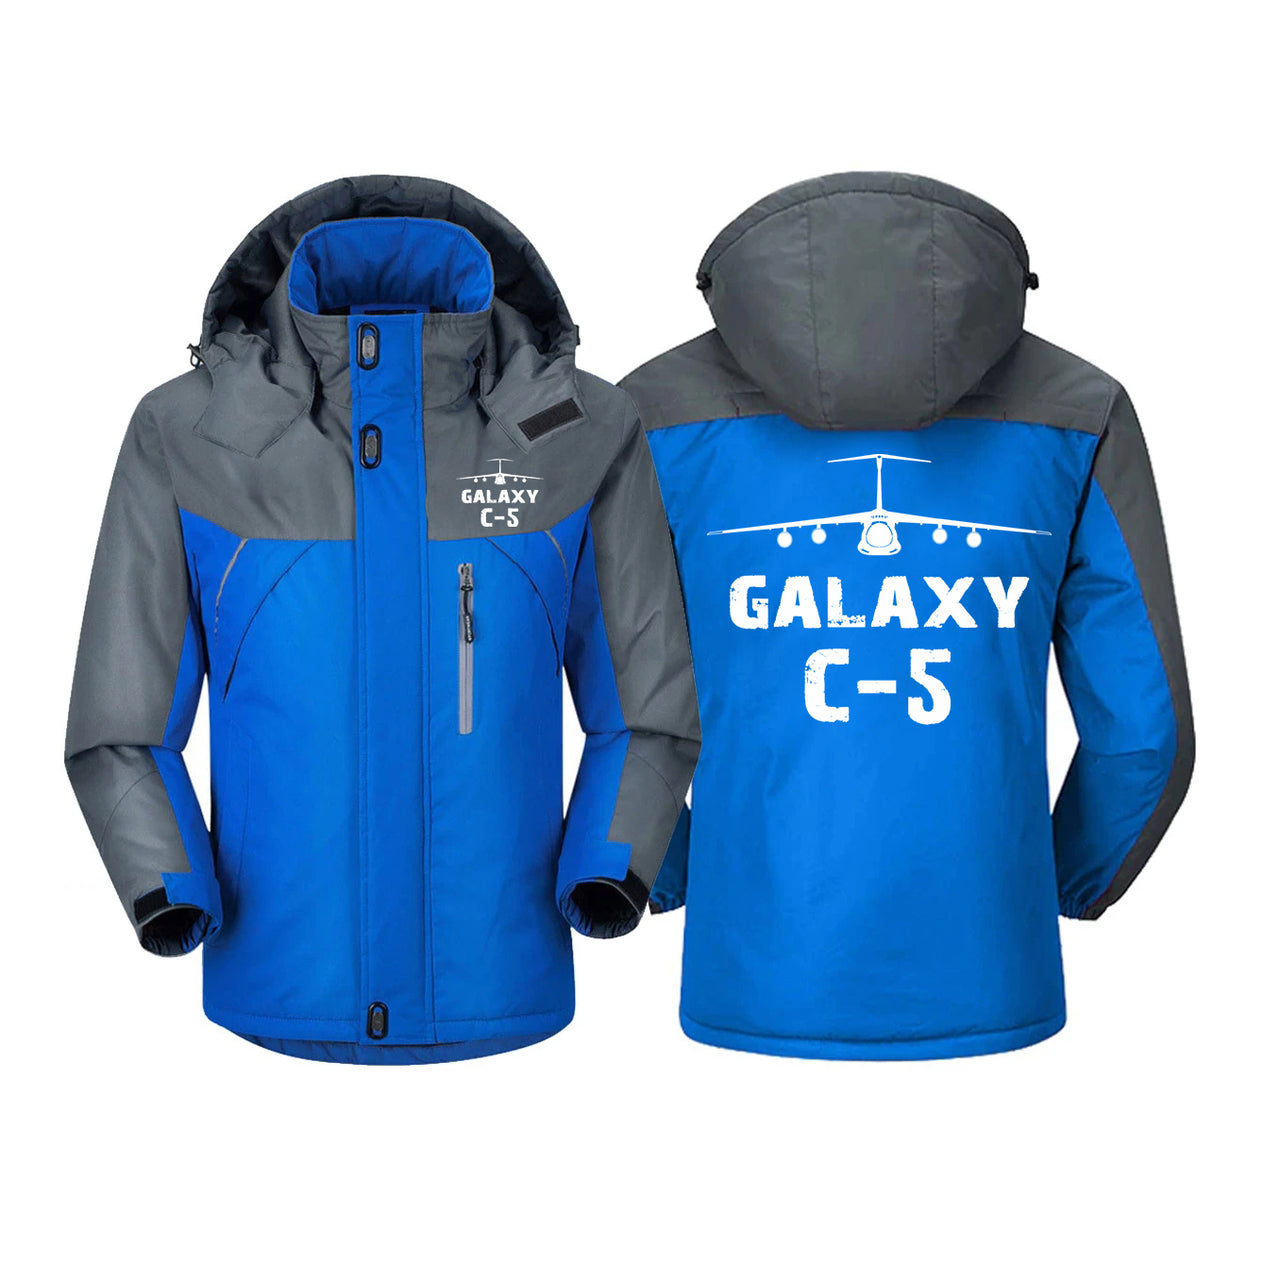 Galaxy C-5 & Plane Designed Thick Winter Jackets